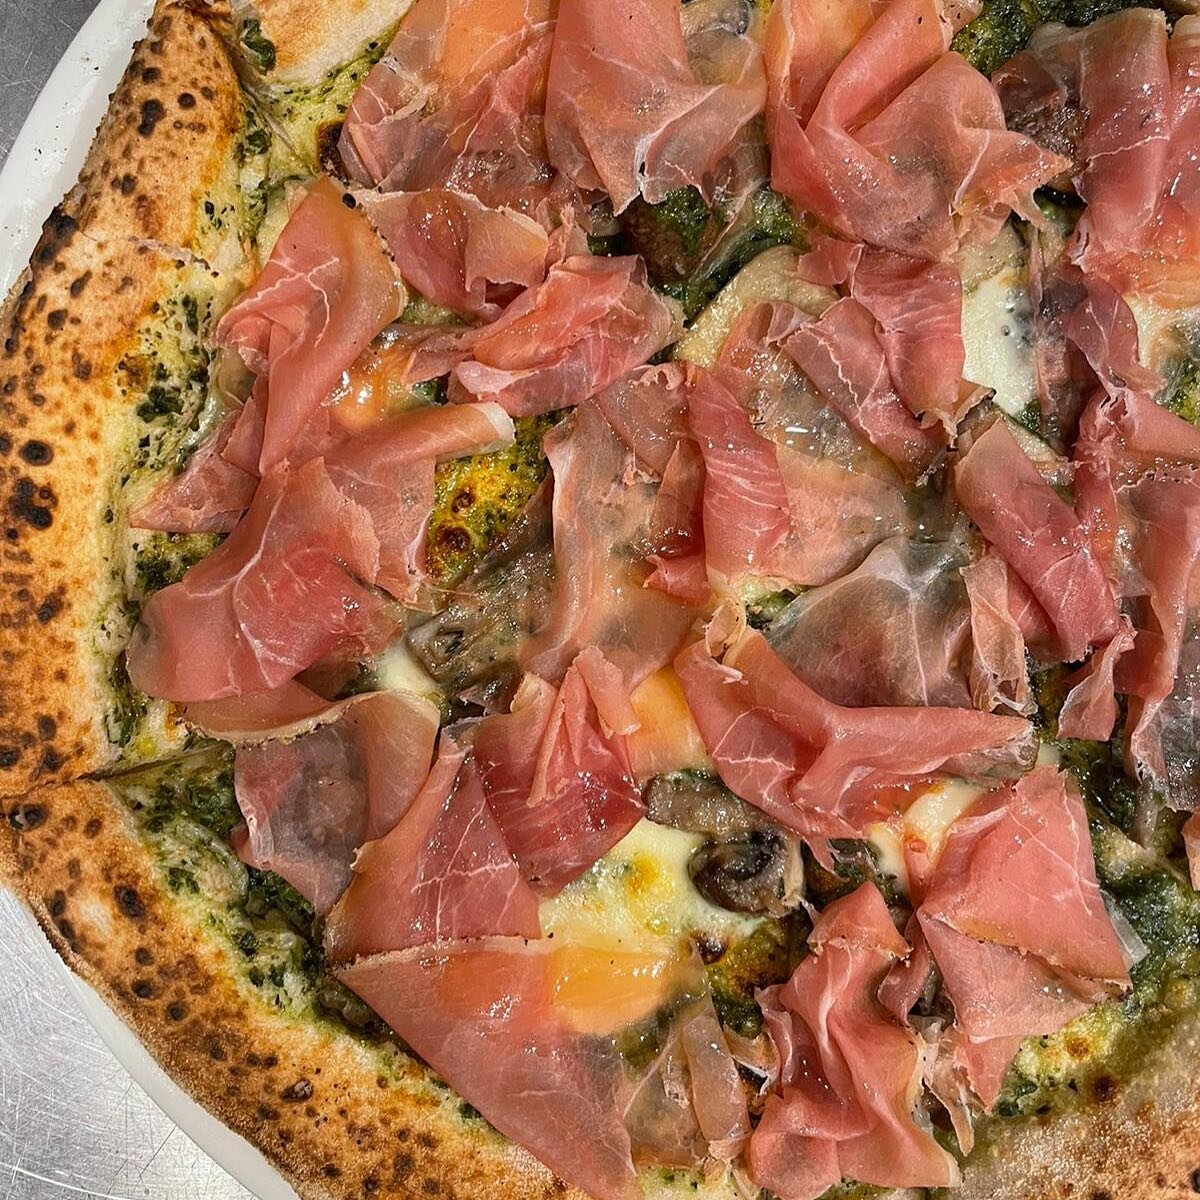 Weekend special 🍕with basil pesto, taleggio, forest 🍄 and smoky speck

#pizza #❤️🍕#pizzaiolo #pizzatime🍕 #pizzeria #ilovepizza #pizzaspecial #pizzaholic #lovepizza #pizzalove #pizzalover #kenmoreeats #pizzeria #violetta #pizzeriavioletta 

🍕: ht